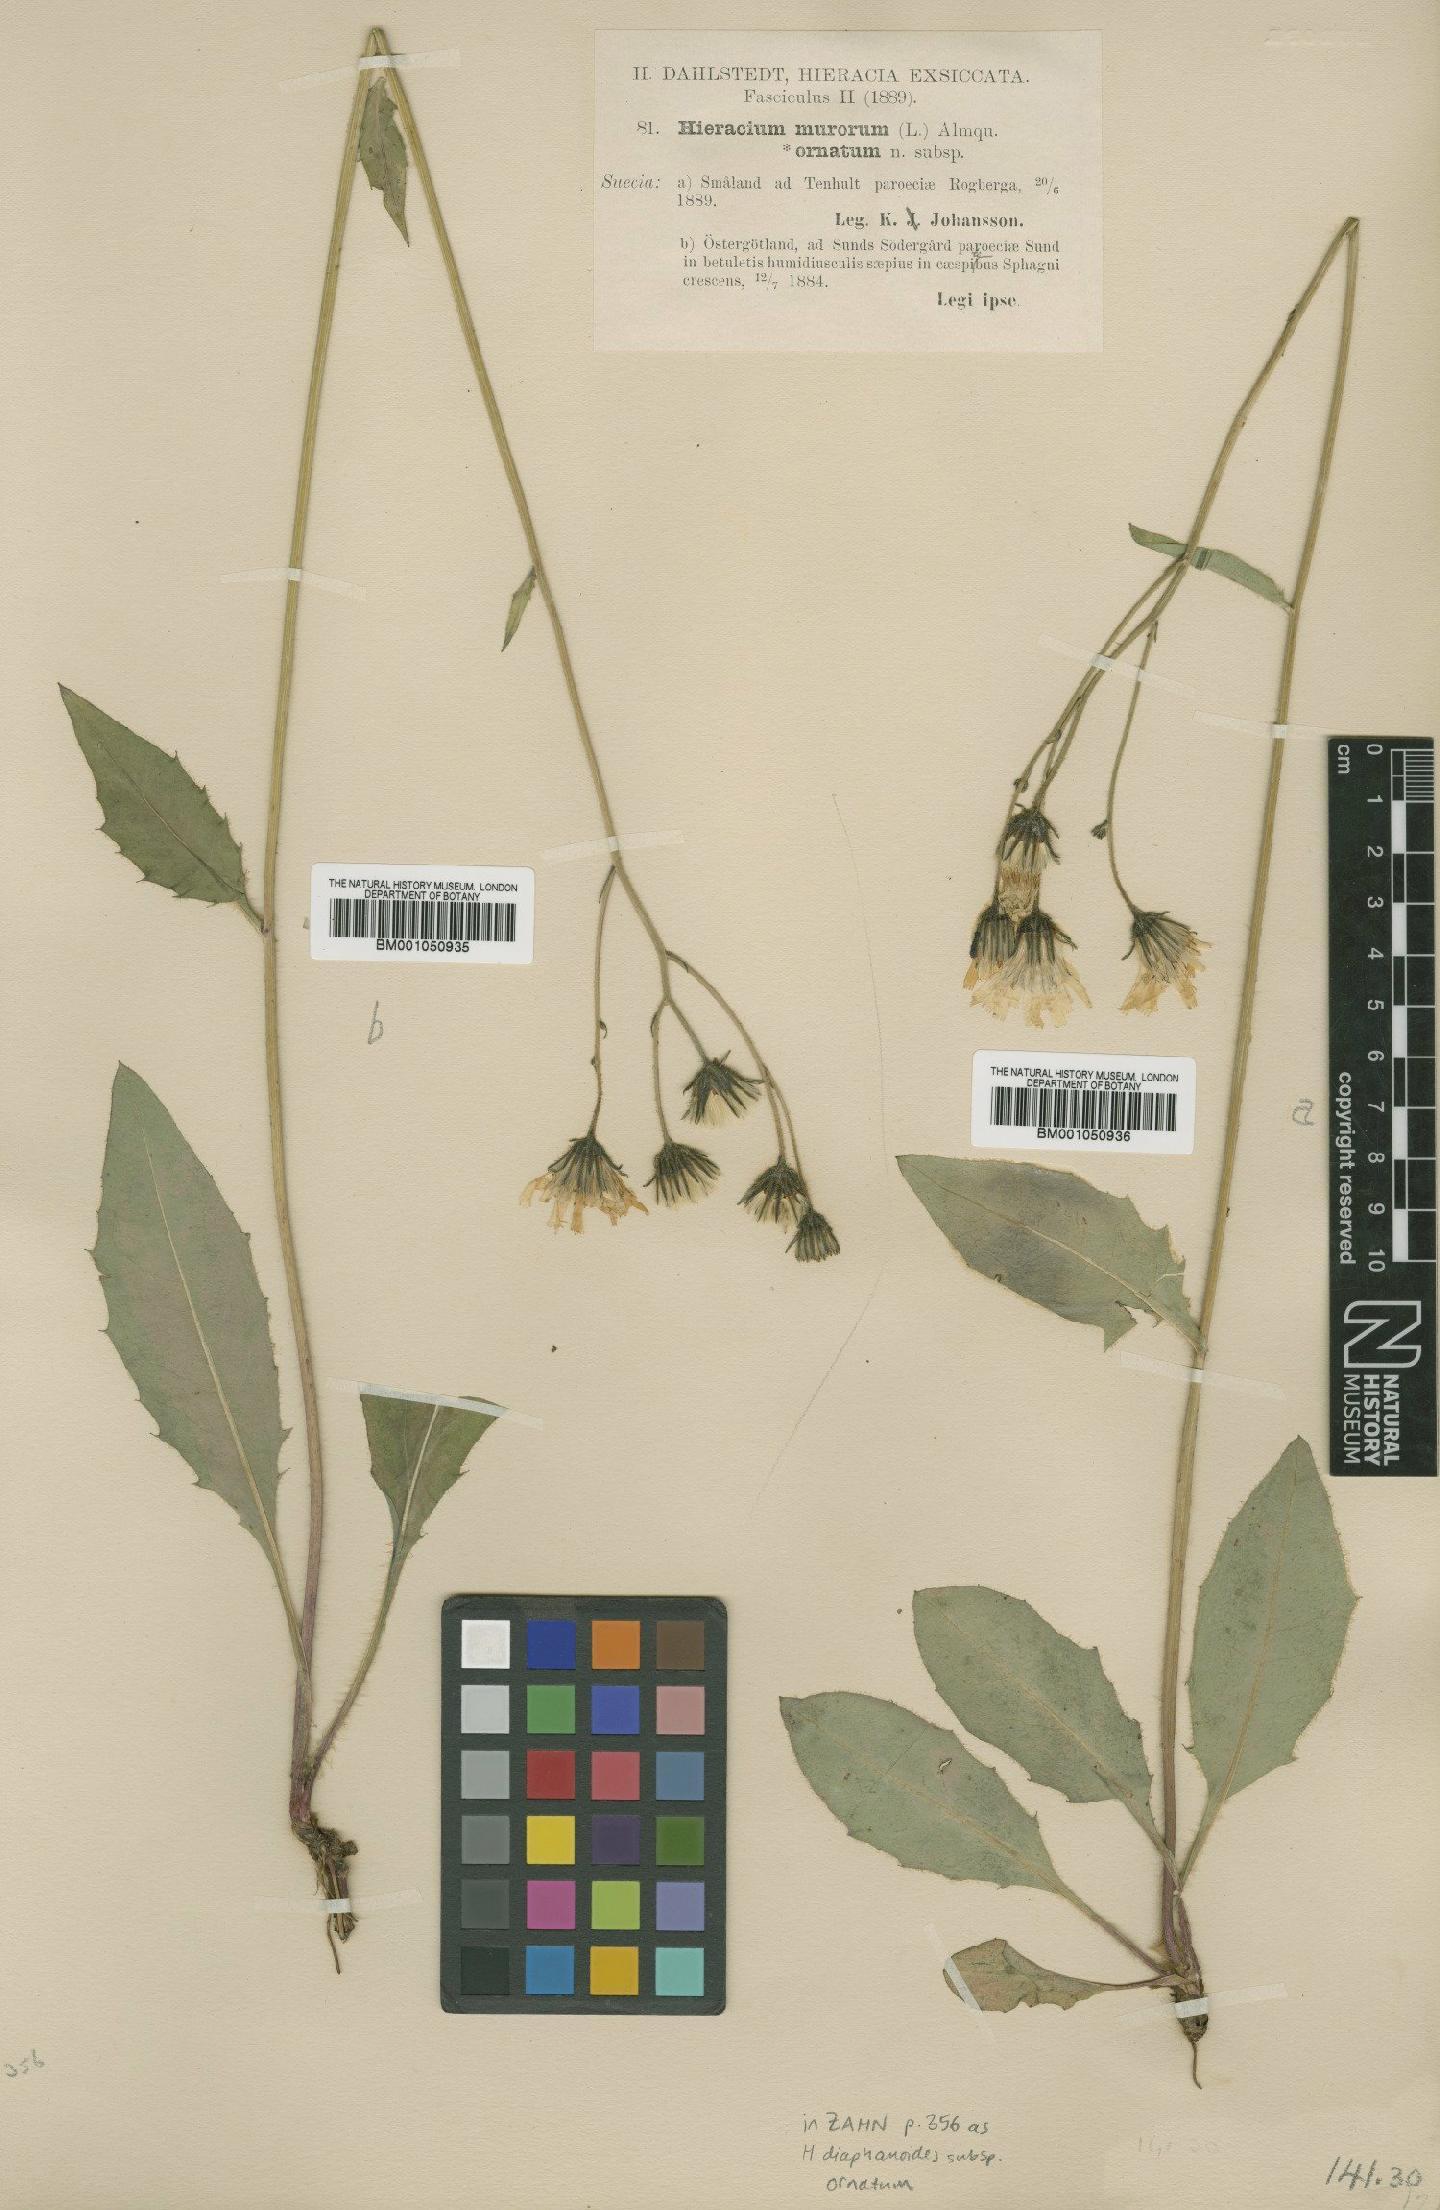 To NHMUK collection (Hieracium diaphanoides subsp. ornatum (Dahlst.) Zahn; TYPE; NHMUK:ecatalogue:2413472)